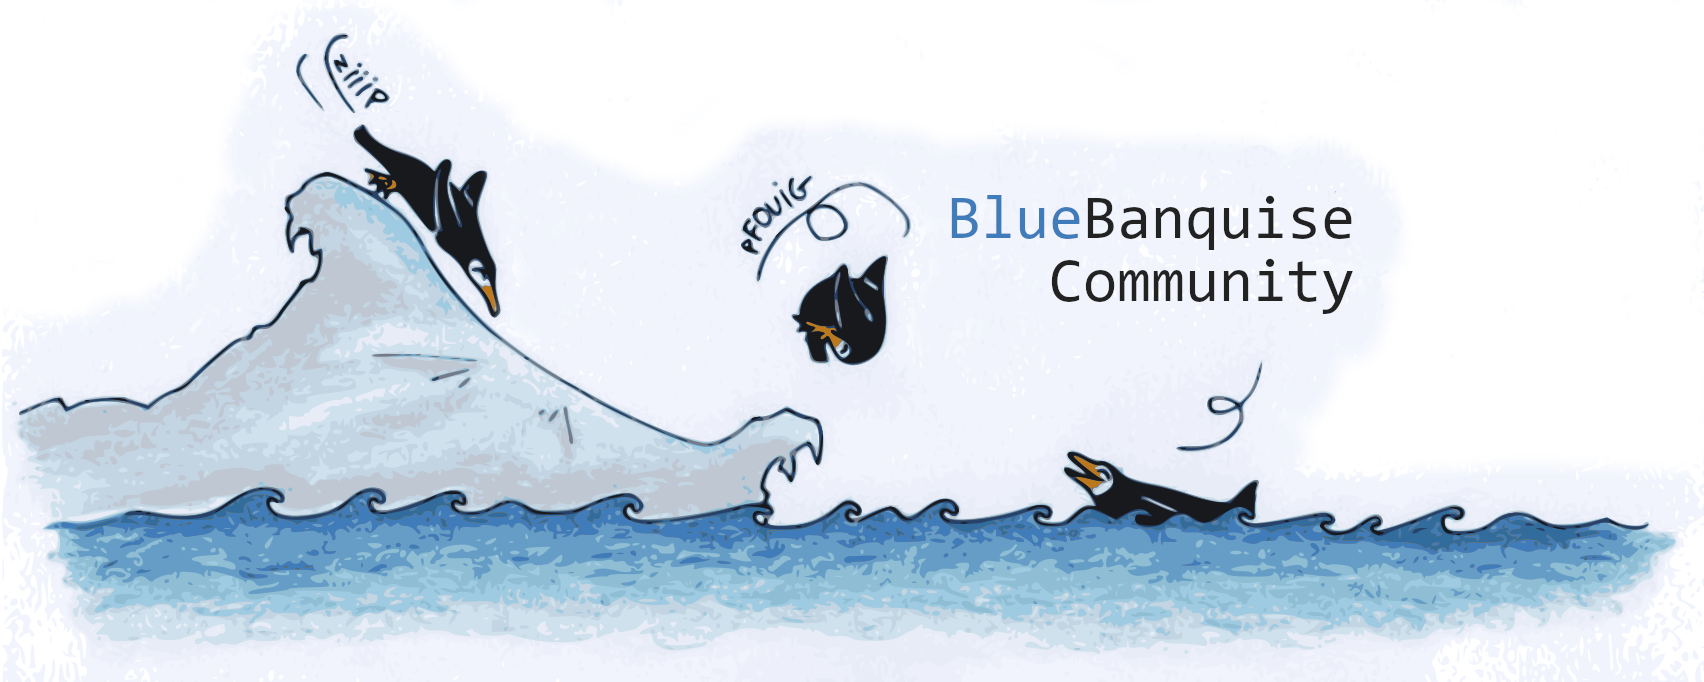 BlueBanquise Community